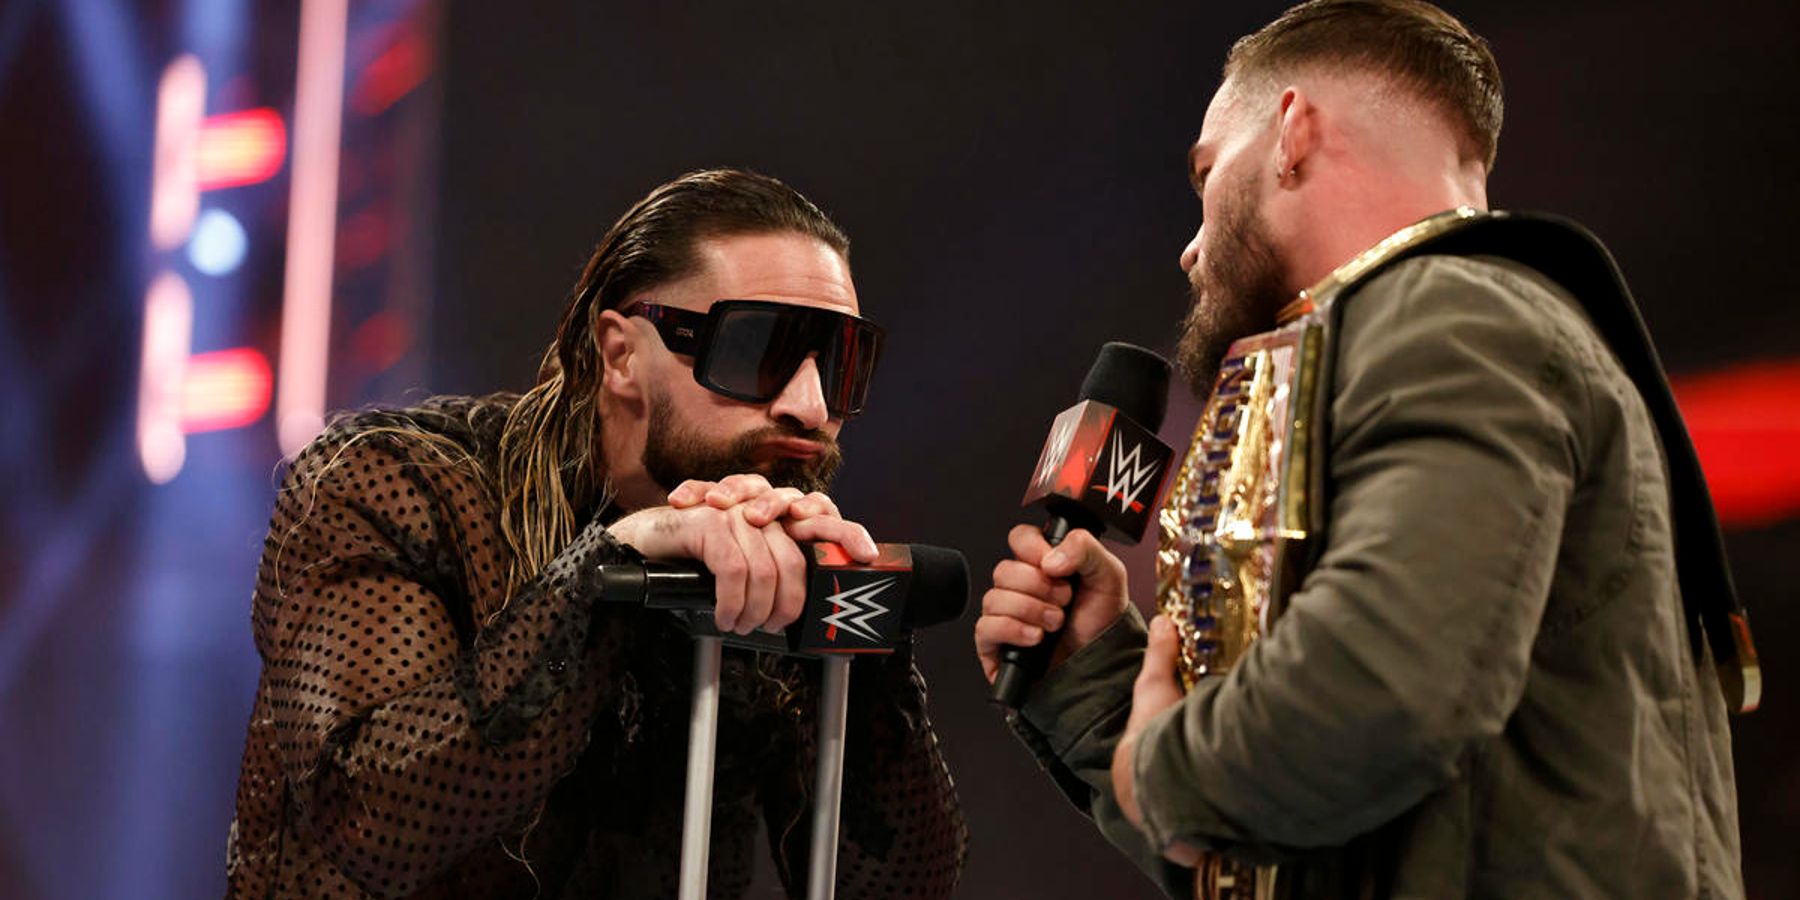 Seth Rollins mocks Austin Theory during a segment on WWE Monday Night Raw in January 2023.